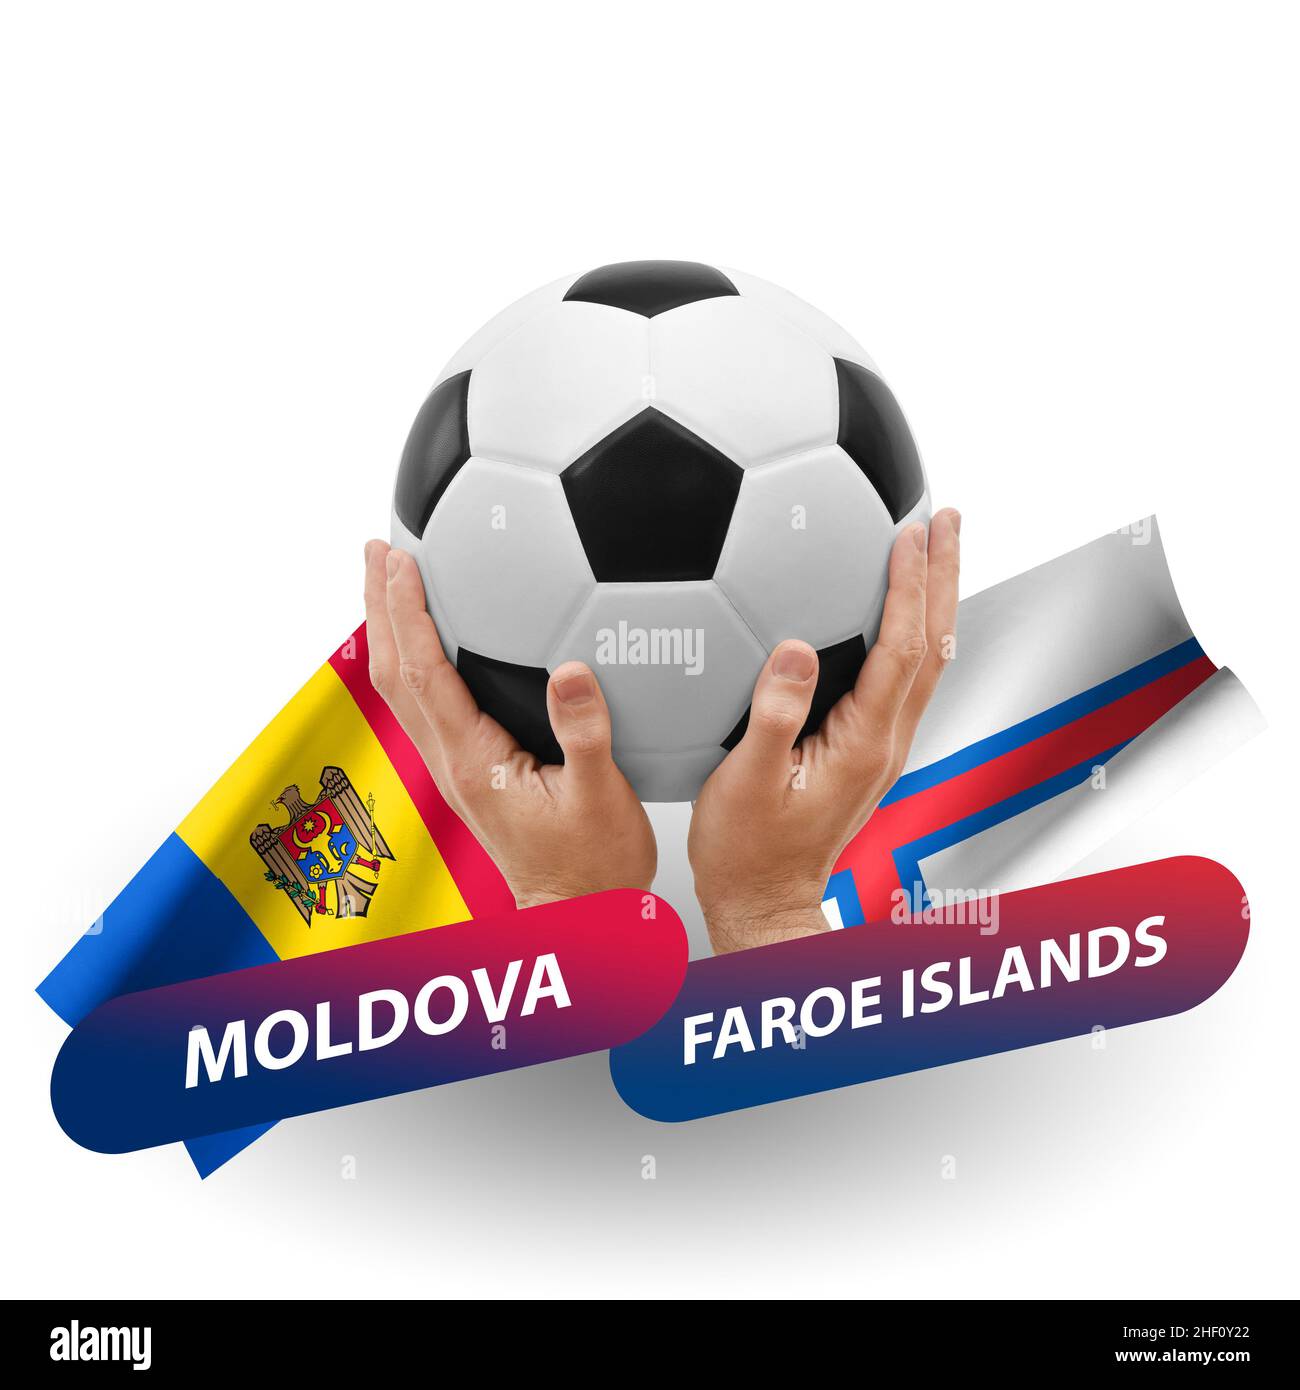 Islas feroe contra moldavia